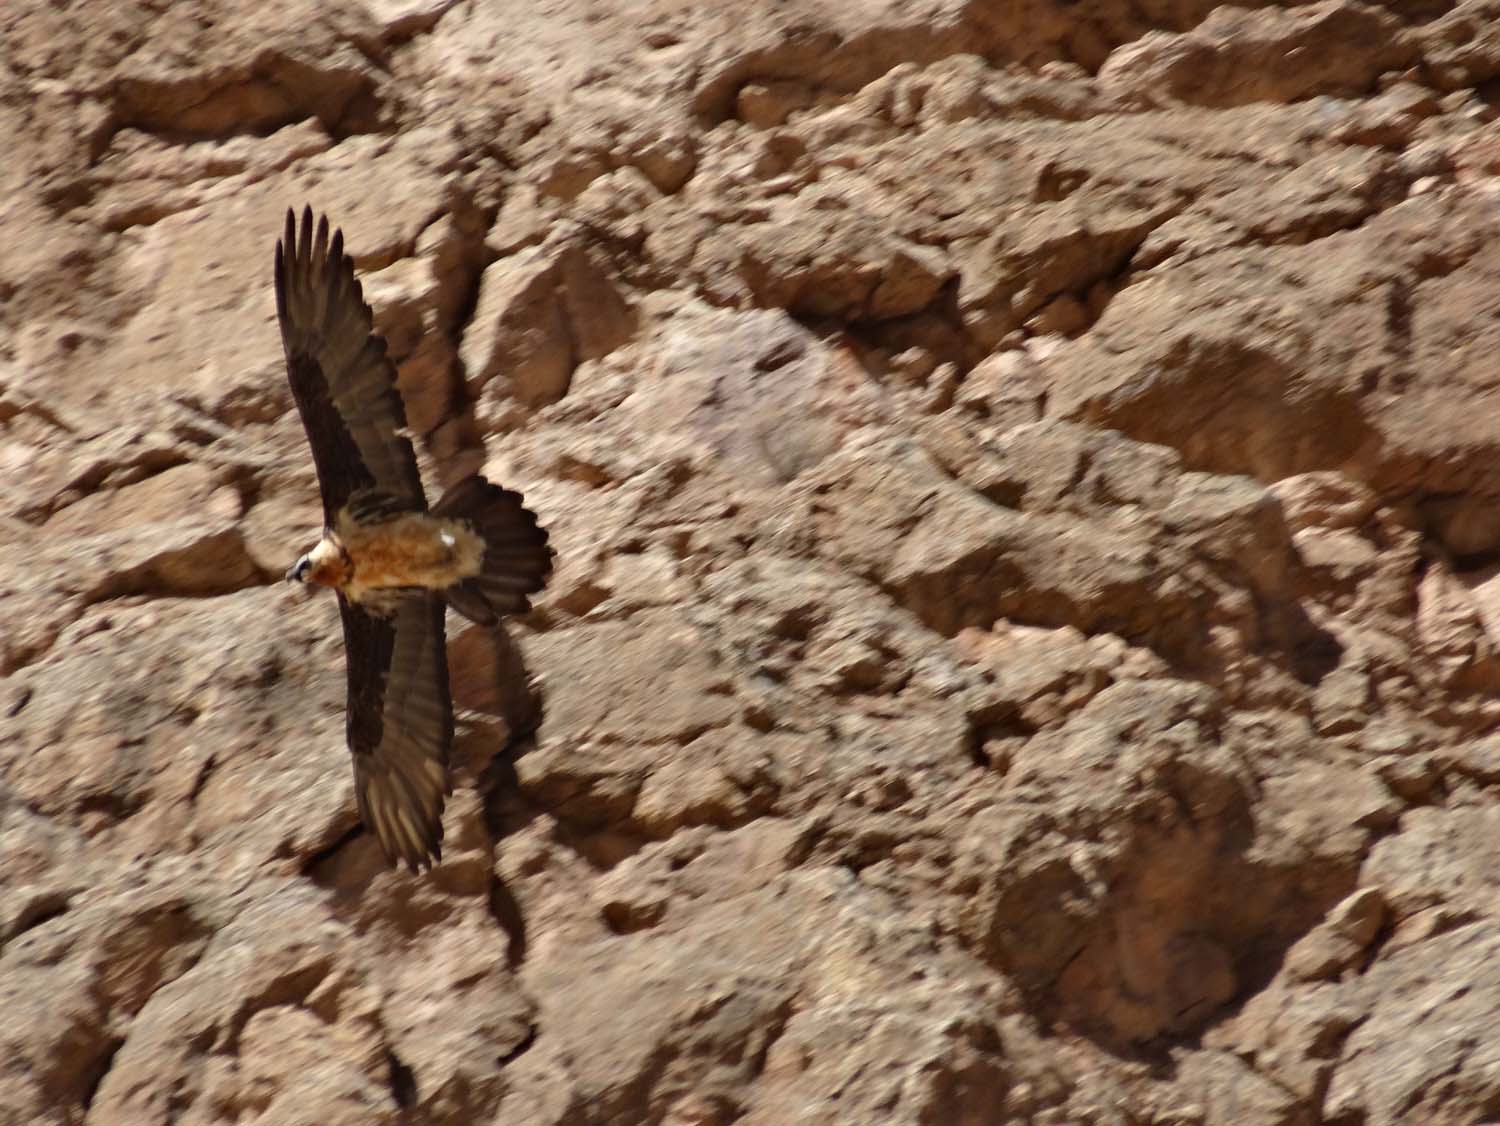 huge bird of prey circling the rocks